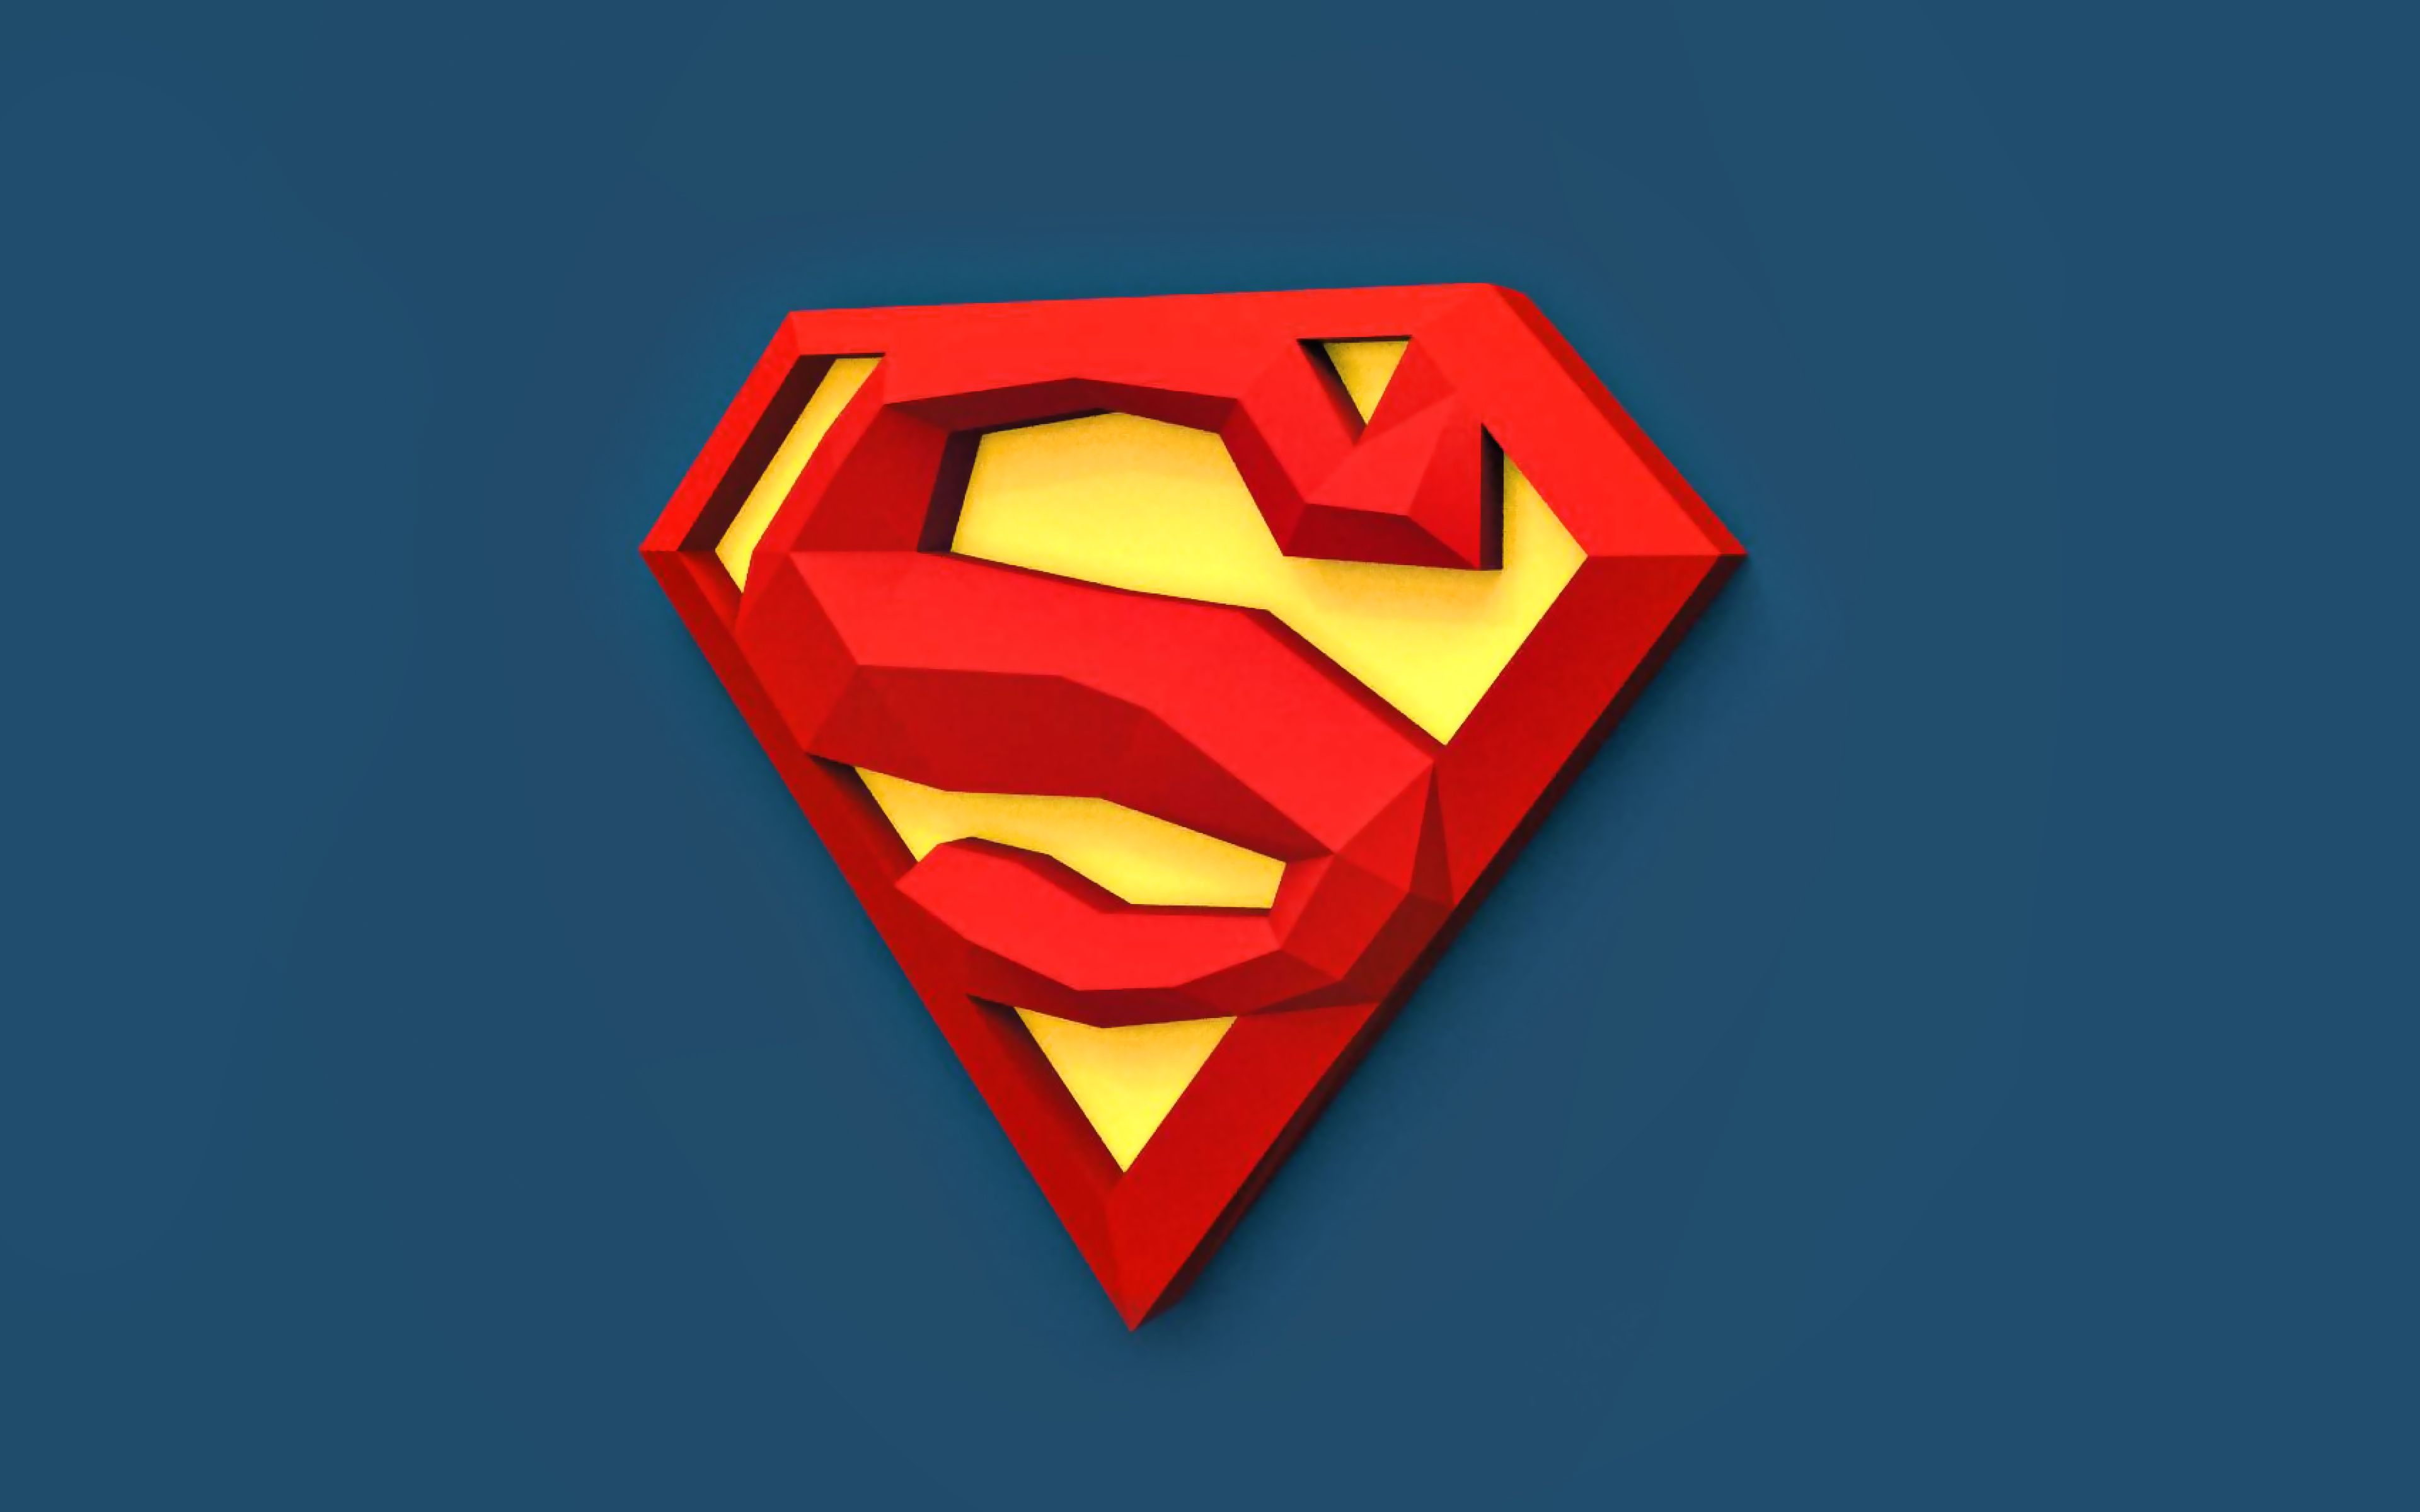 Download wallpaper Superman 3D logo, 4K, minimal, Superman logo, superheroes, blue background, creative, Superman for desktop with resolution 3840x2400. High Quality HD picture wallpaper